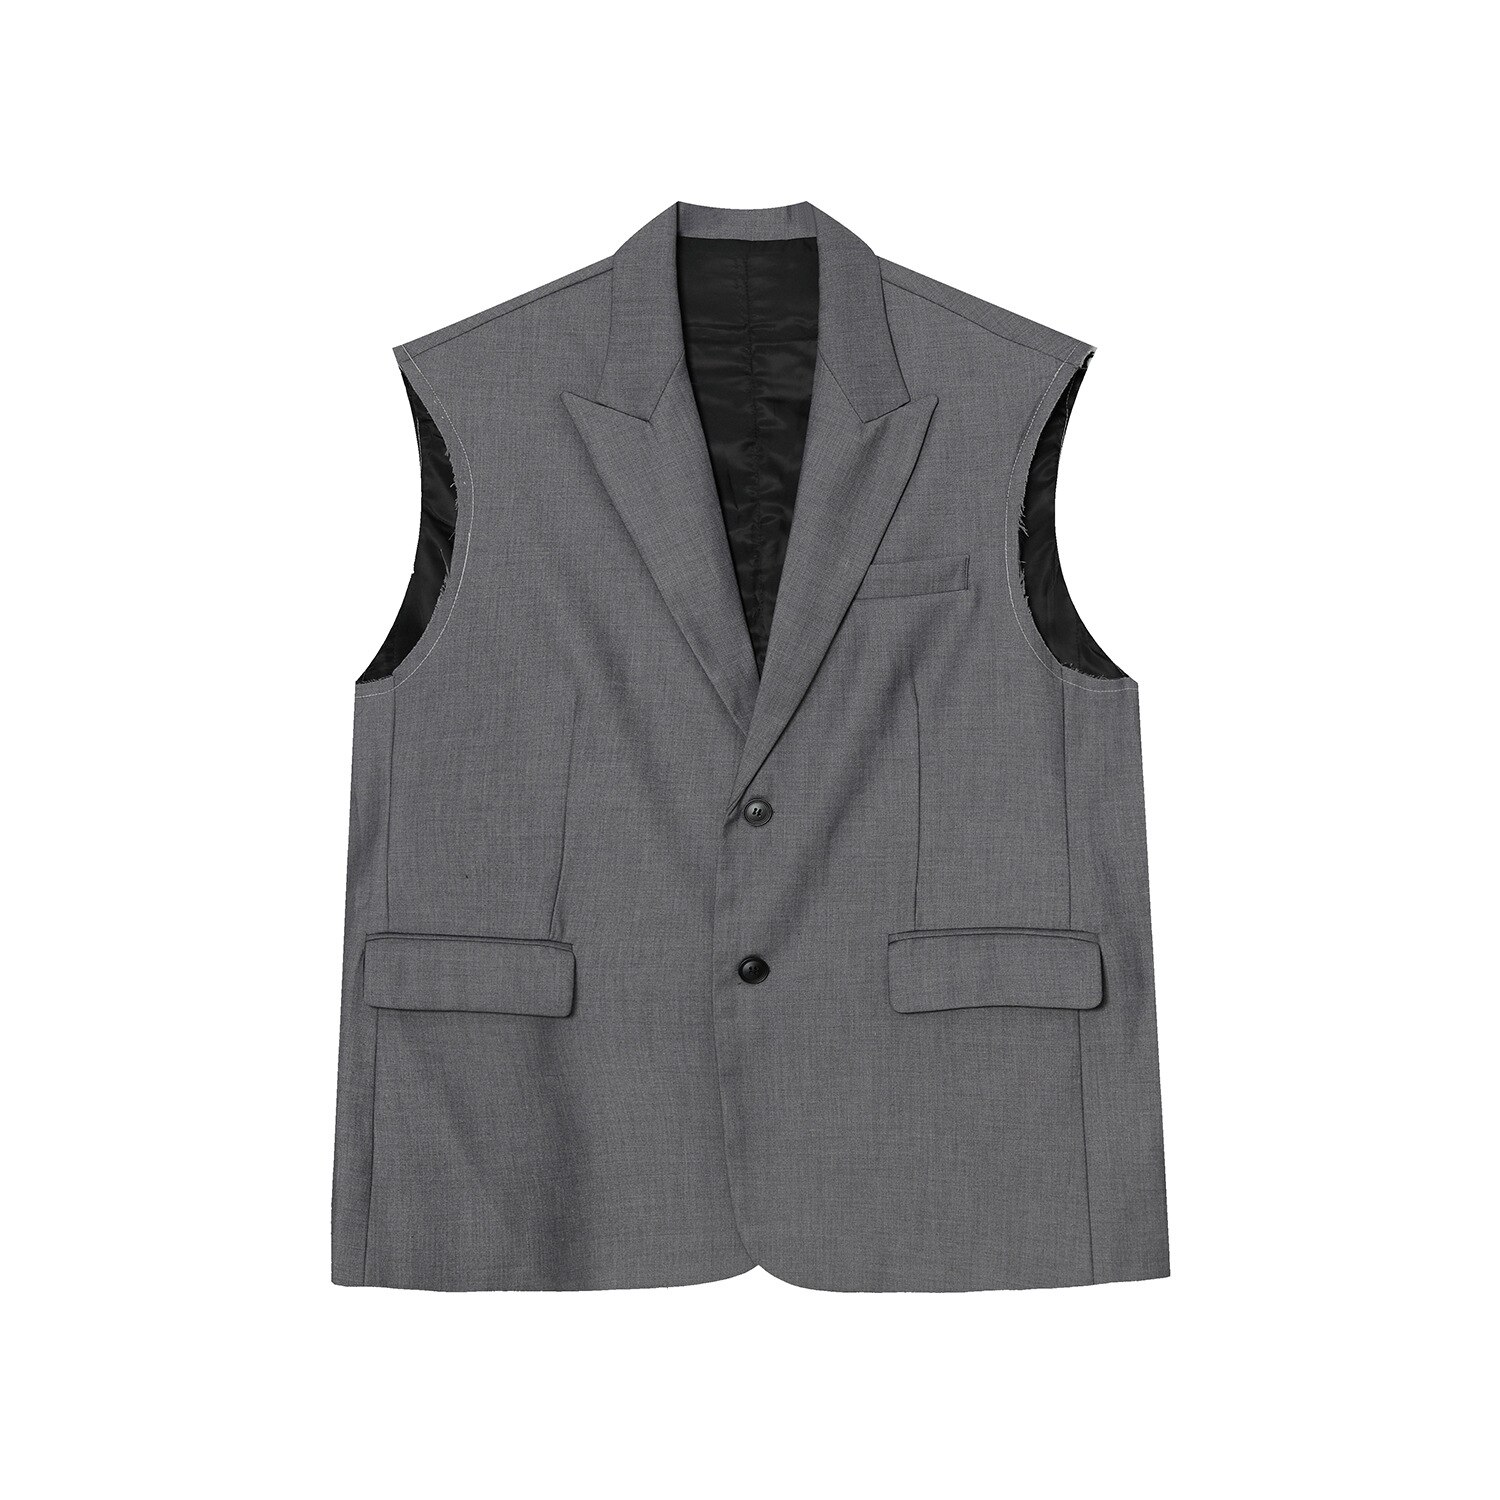 Iefb Herenkleding Lente Causale Pak Vest Koreaanse Mode Ins Losse Casual Vest Met Pocket Grey Mouwloze y5400: Gray / XL